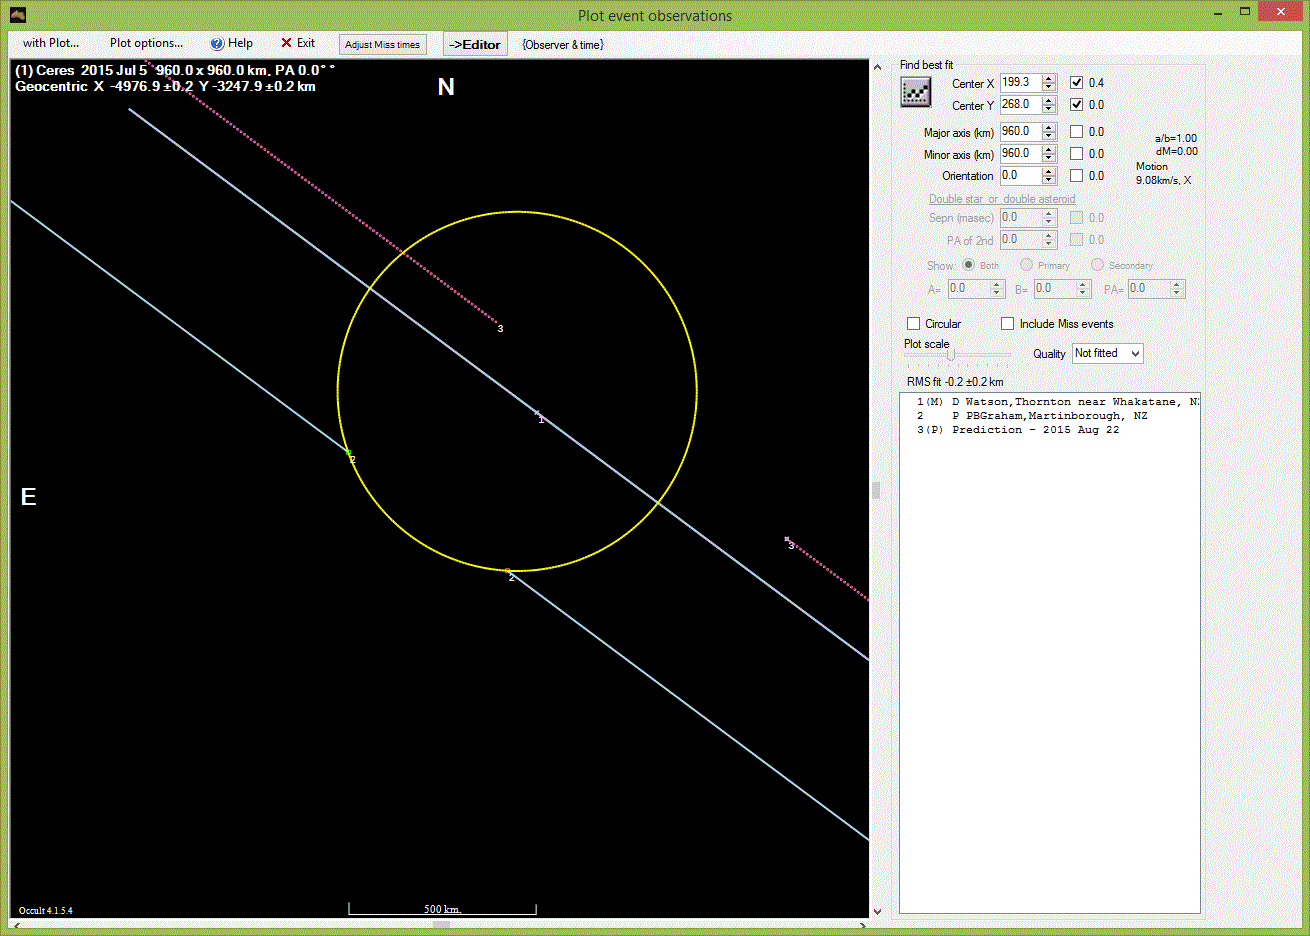 Ceres occultation__ 2015 July 5